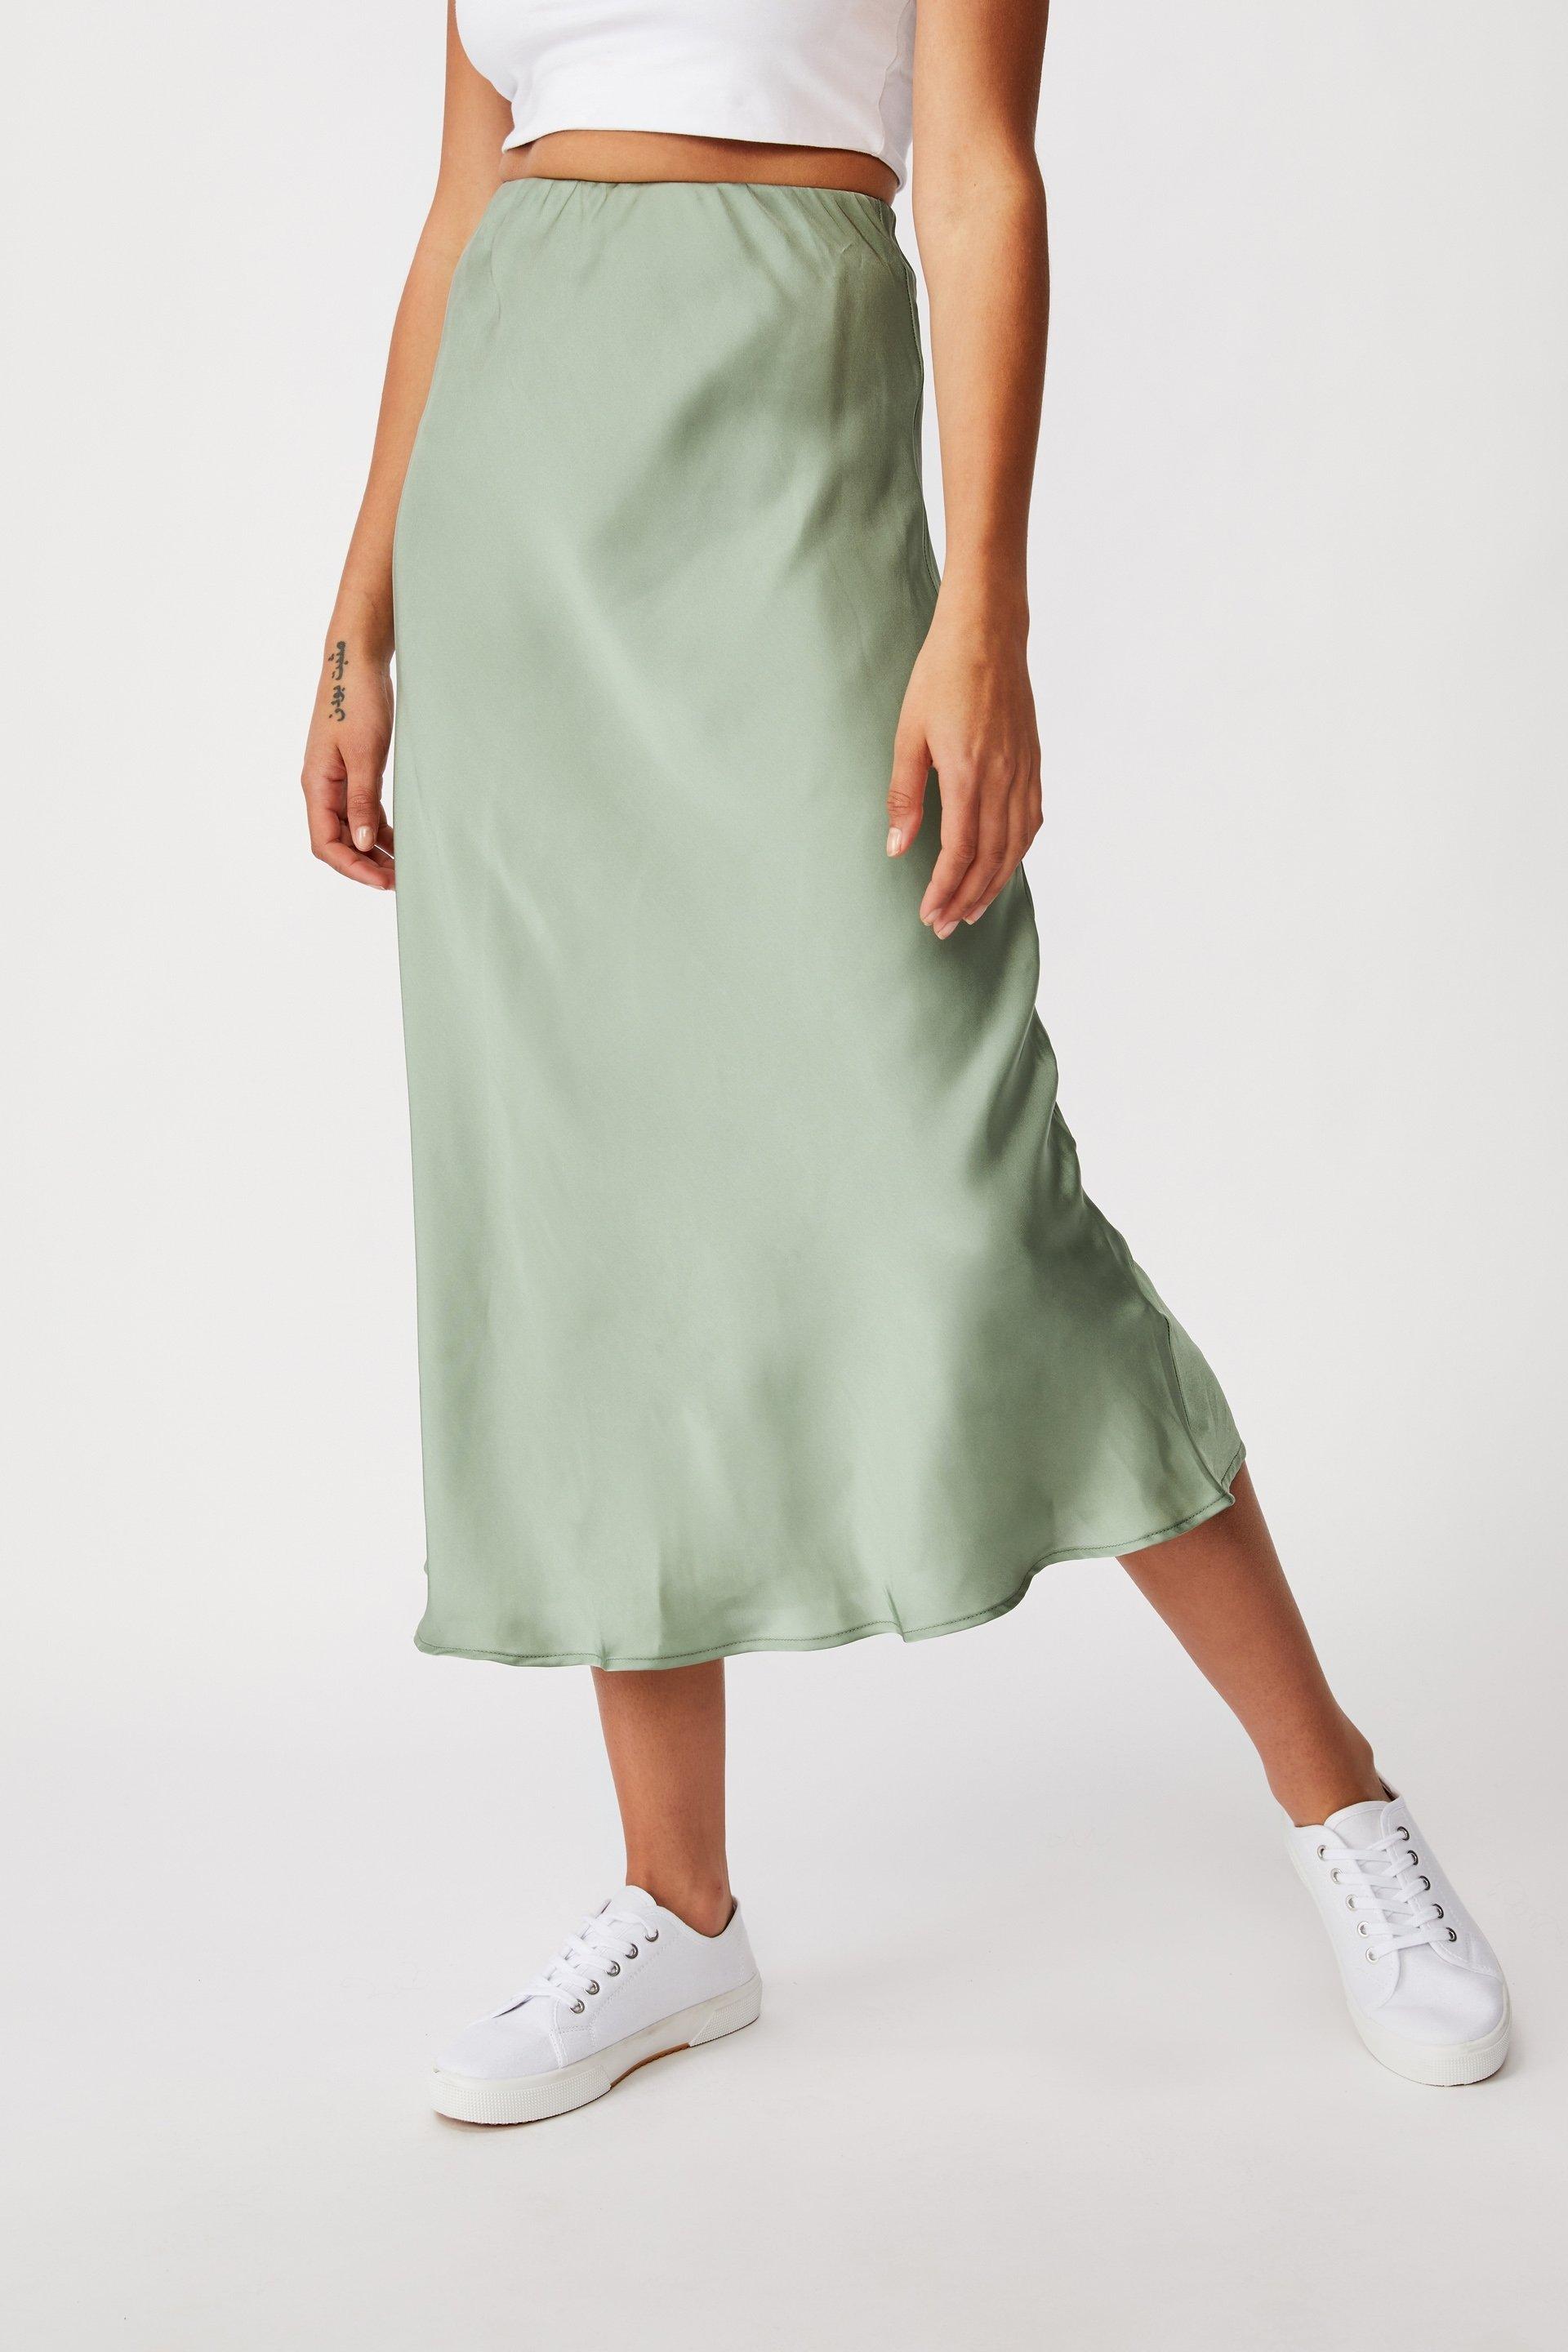 Belle bias midi skirt - green Cotton On Skirts | Superbalist.com